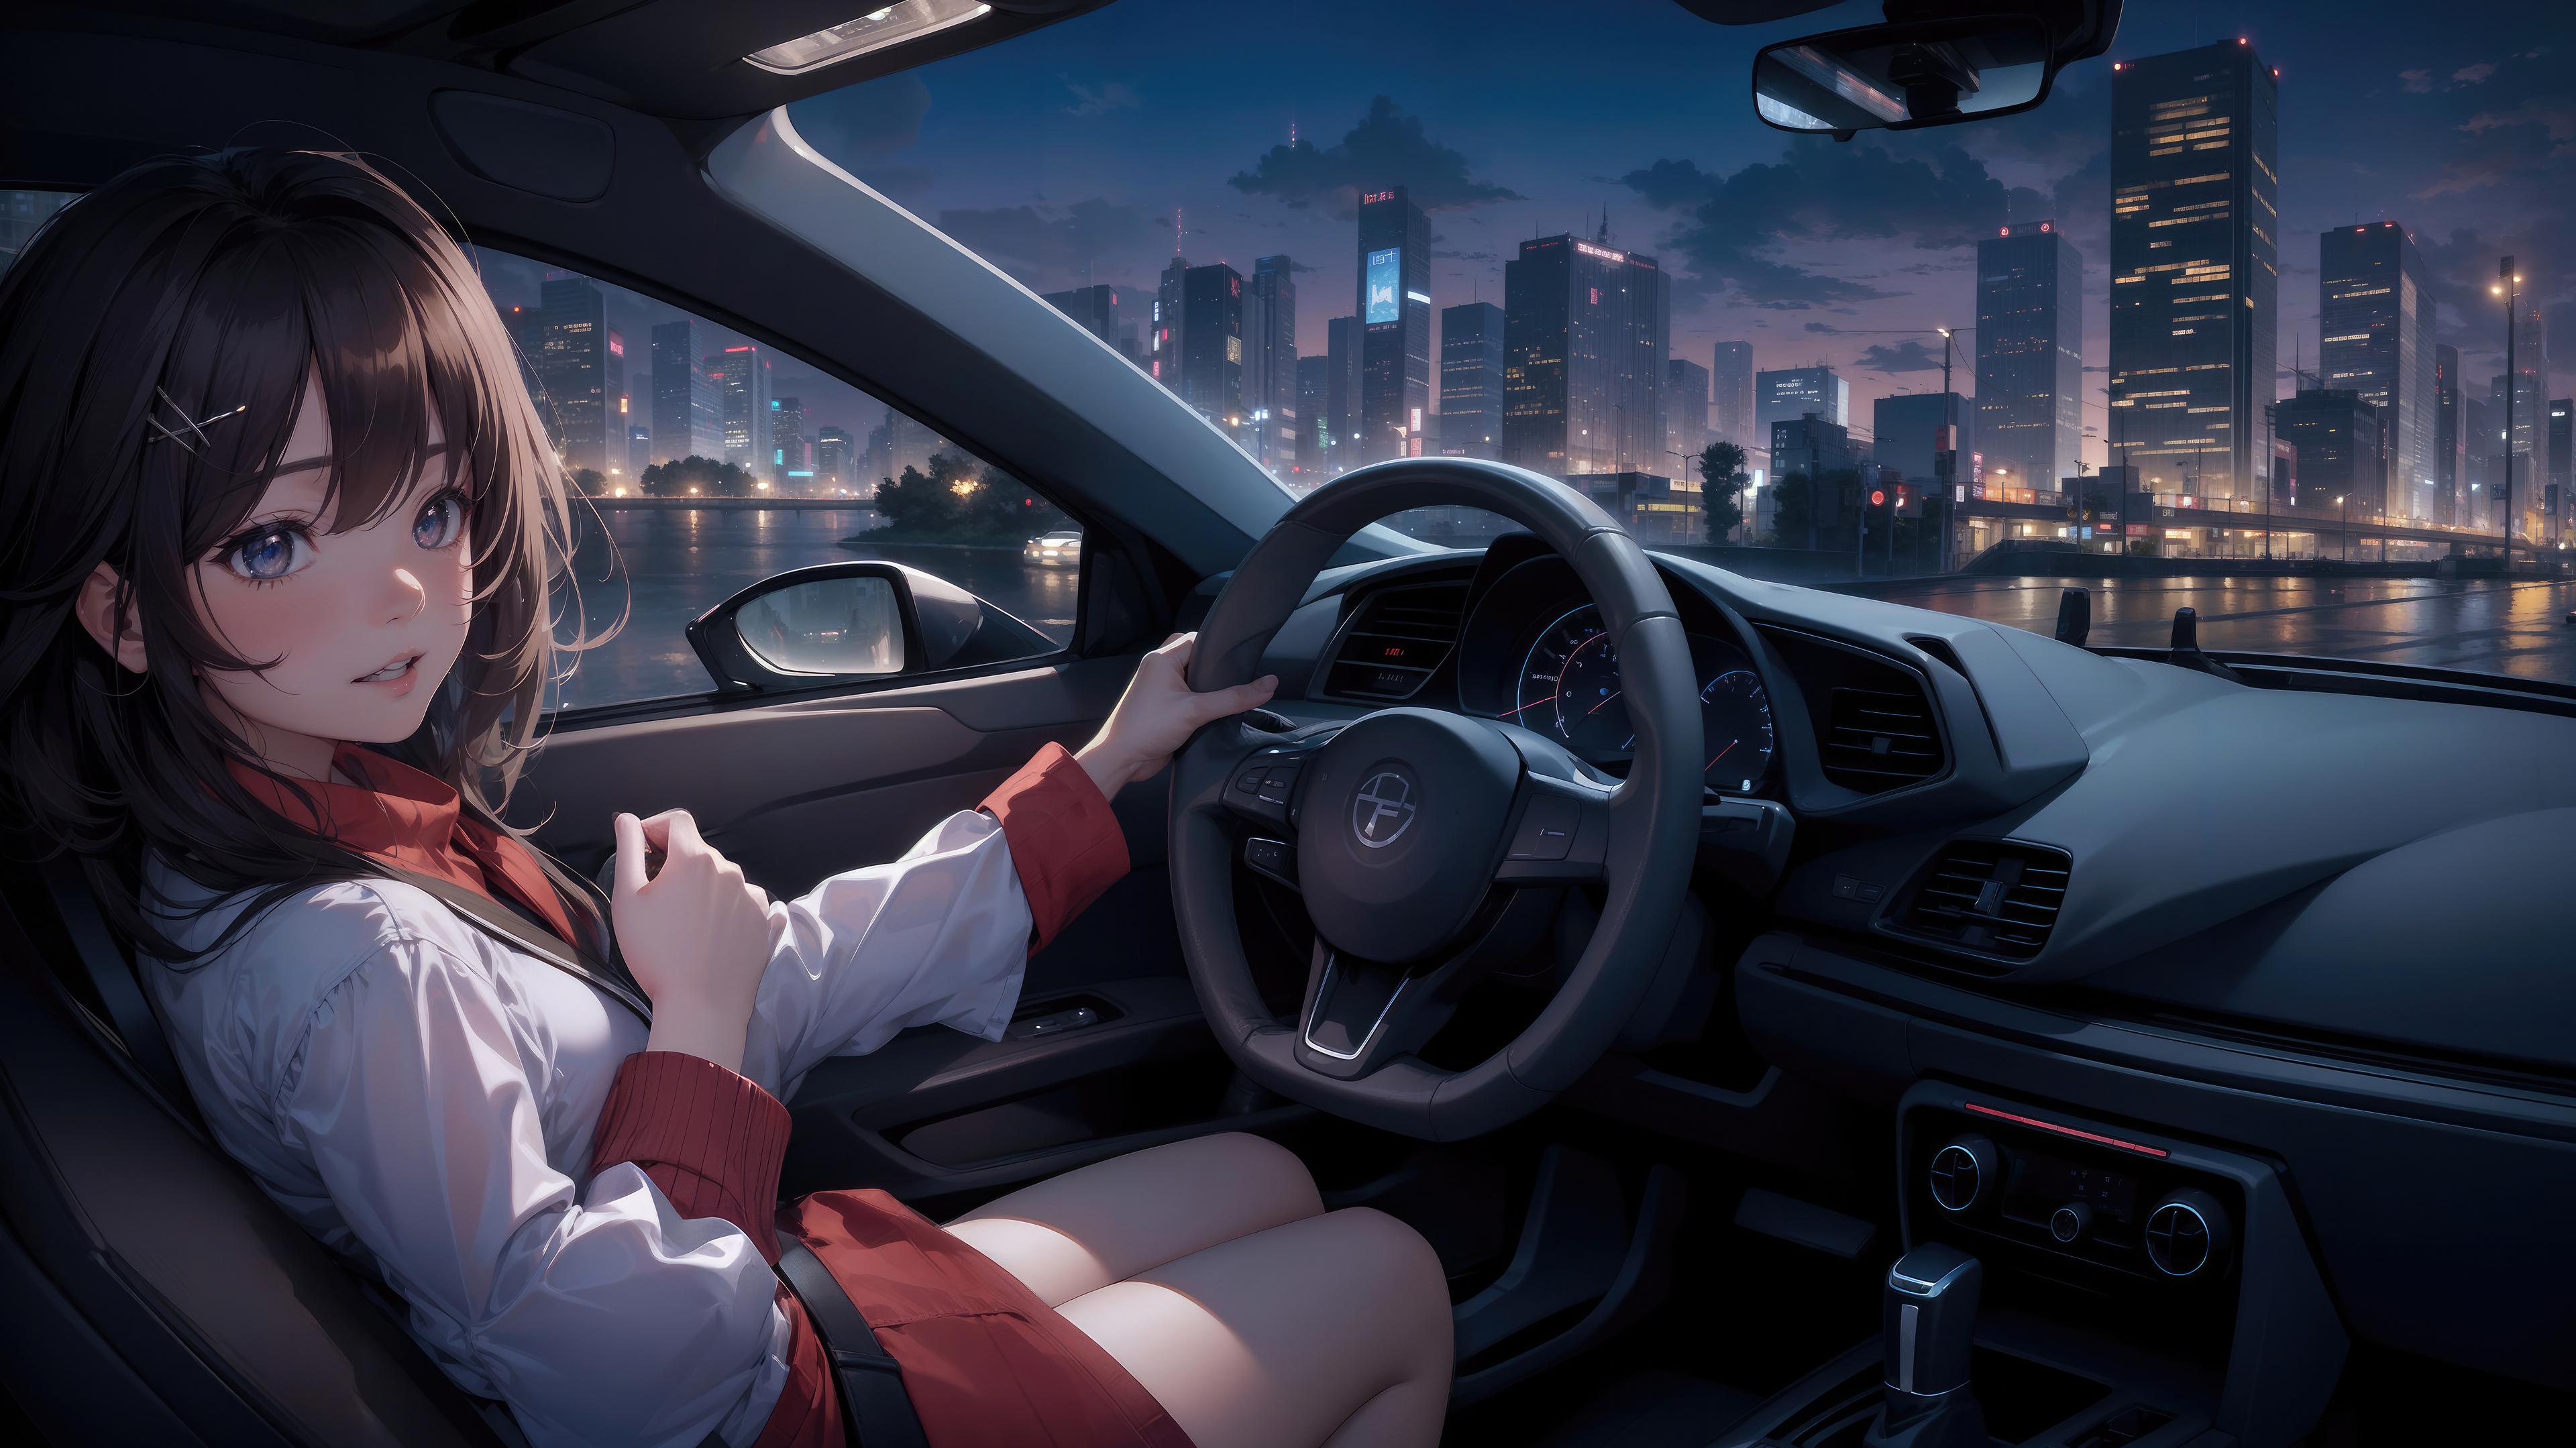 3840x2160 Anime Girl In Car 5k 4k HD 4k Wallpapers Images